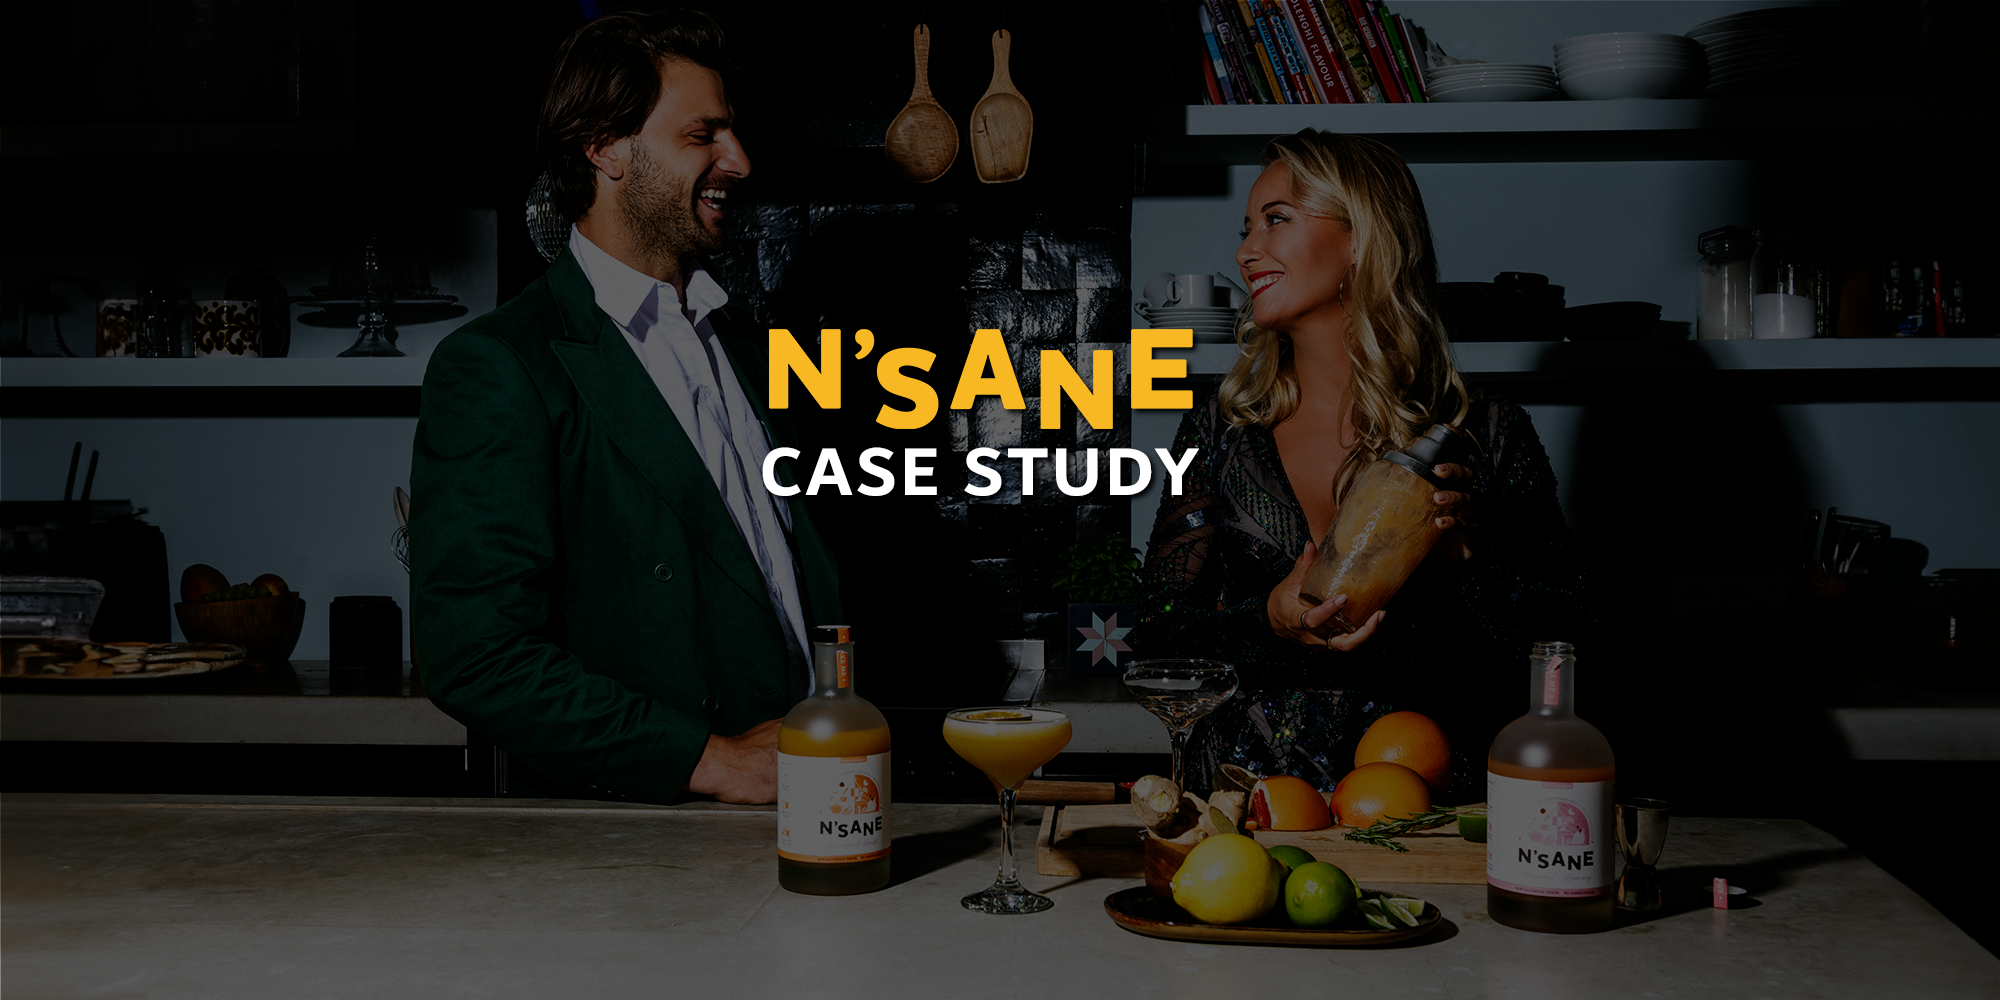 N'sane case study